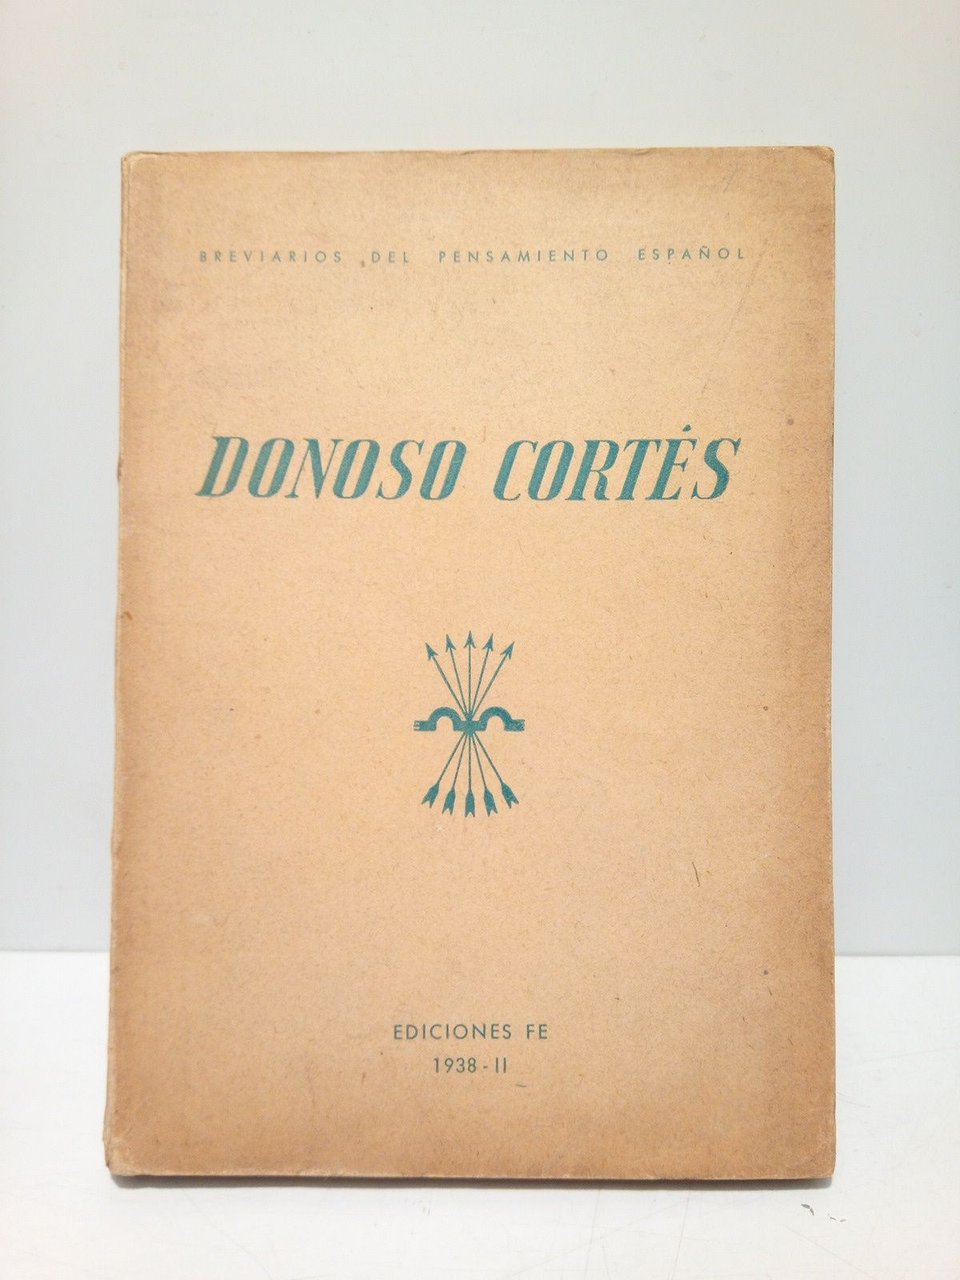 Donoso Cortés / Selección de Antonio Tovar